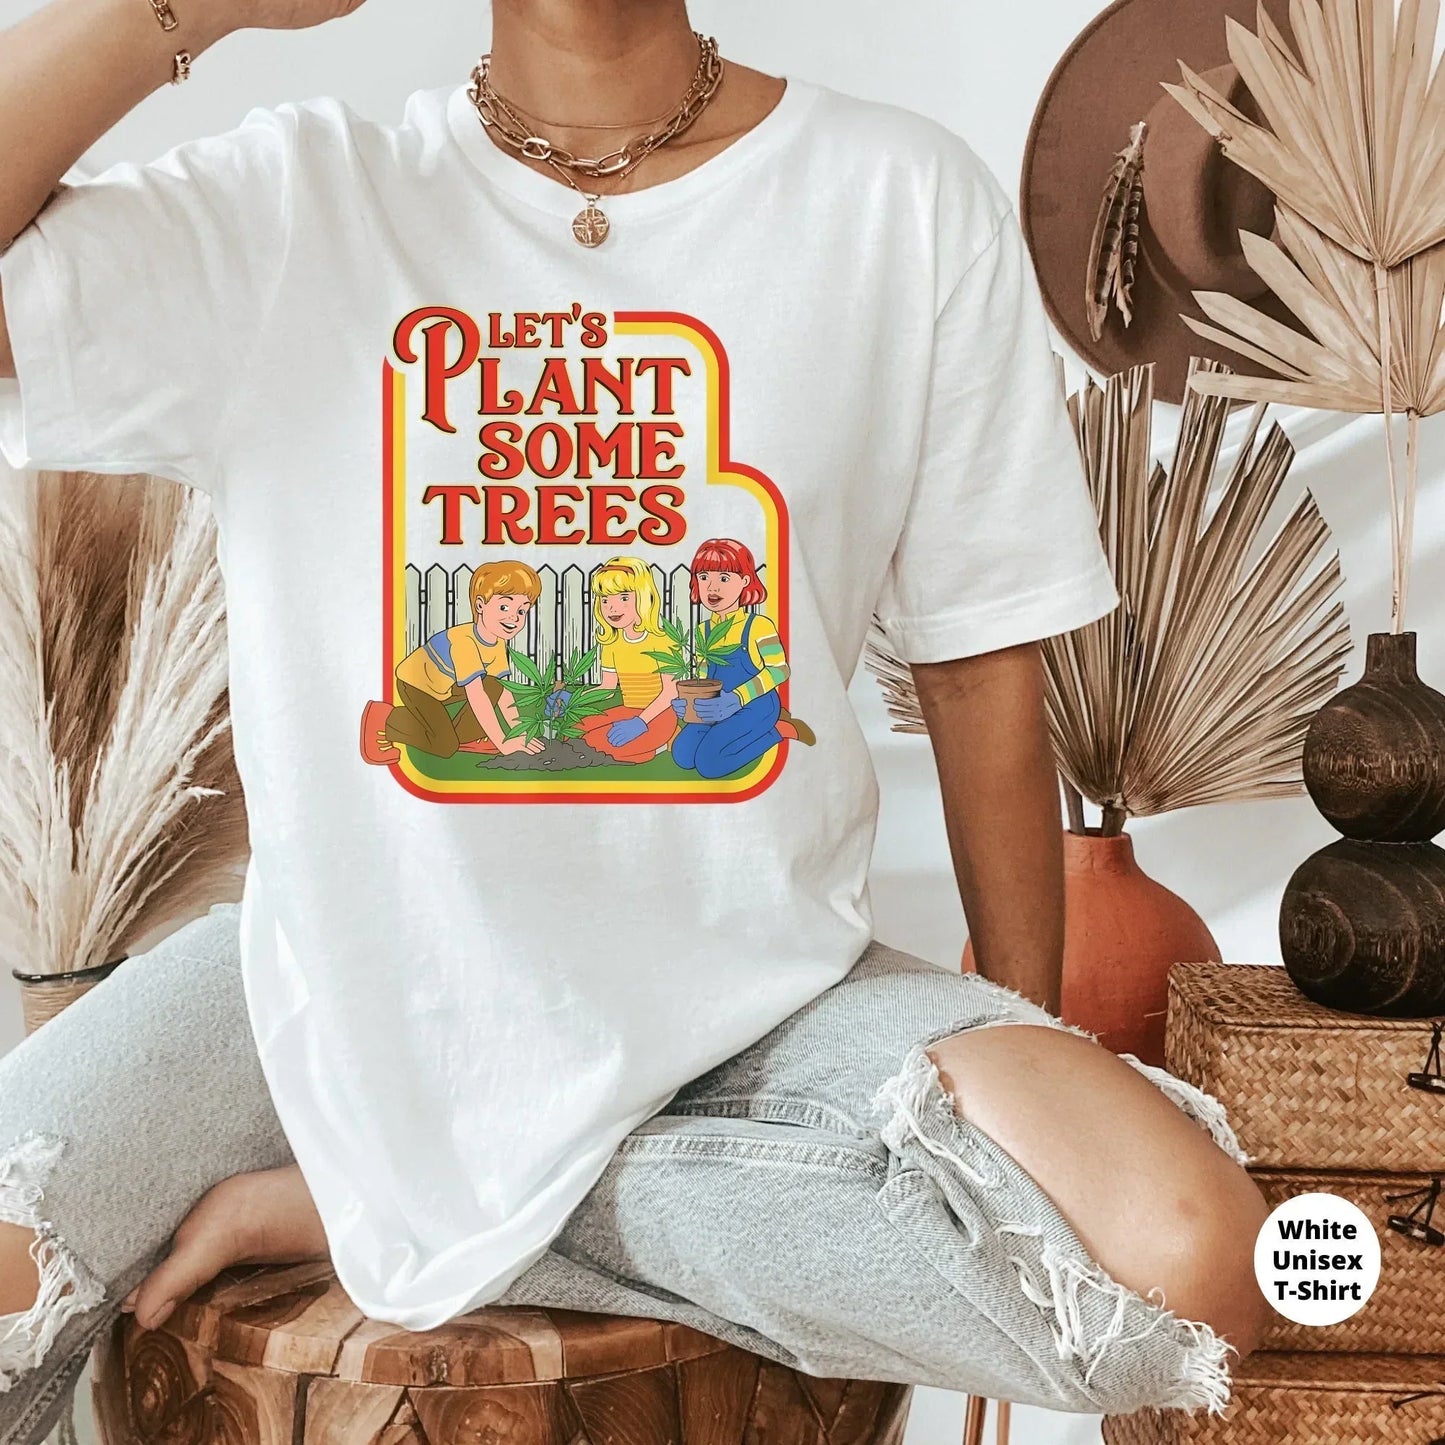 Let's Plant Some Trees, Vintage Stoner Shirt